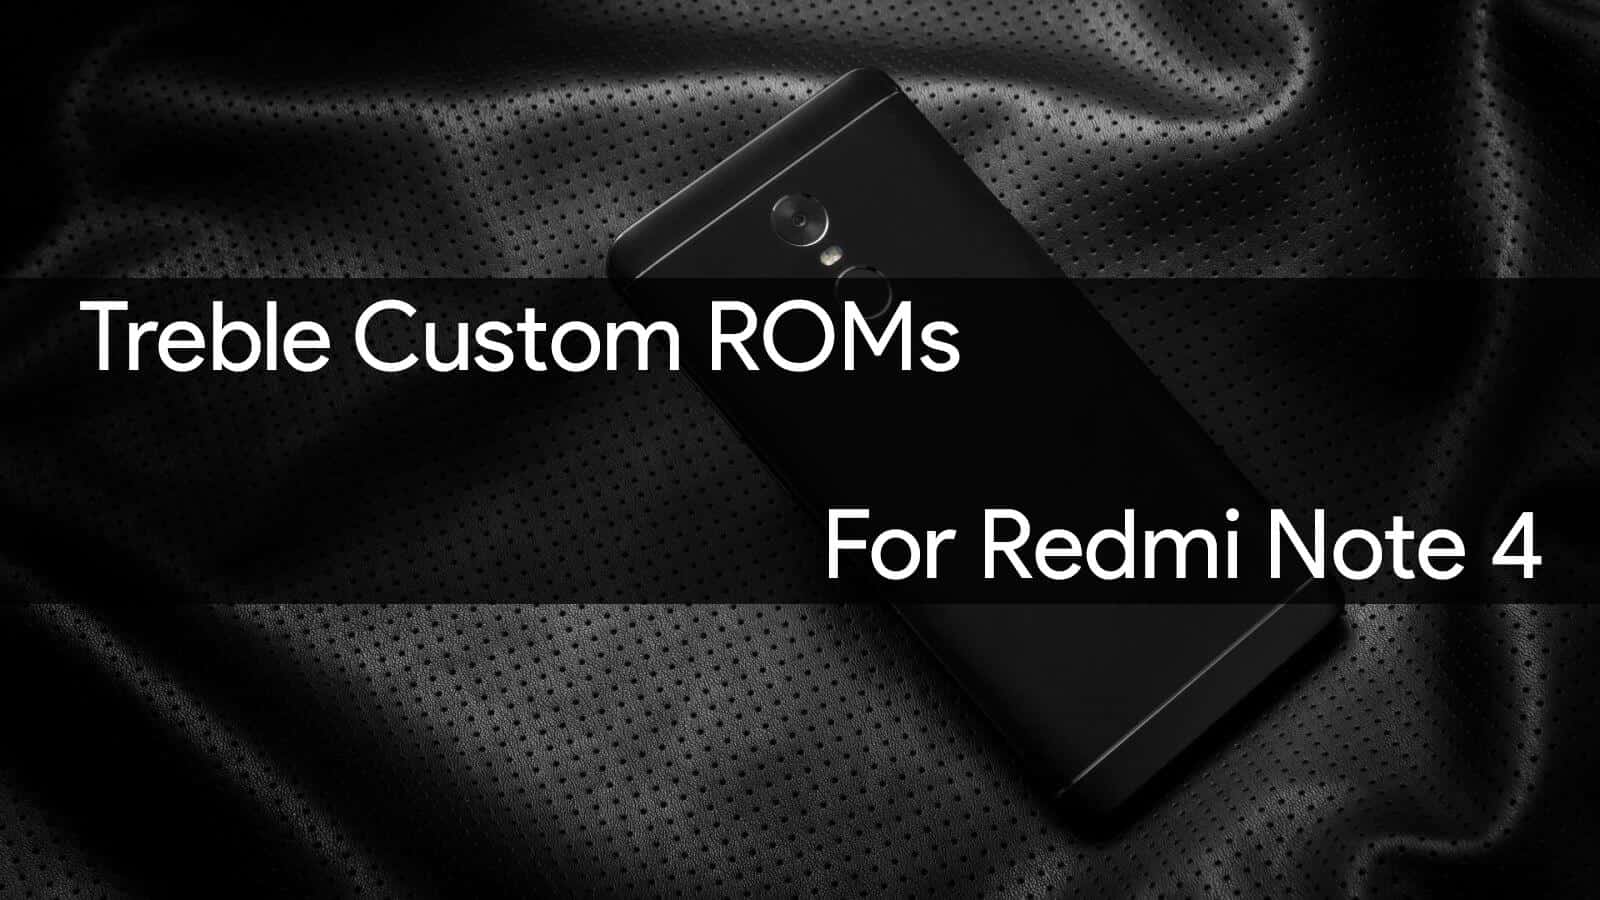 Treble Custom roms for Redmi note 4